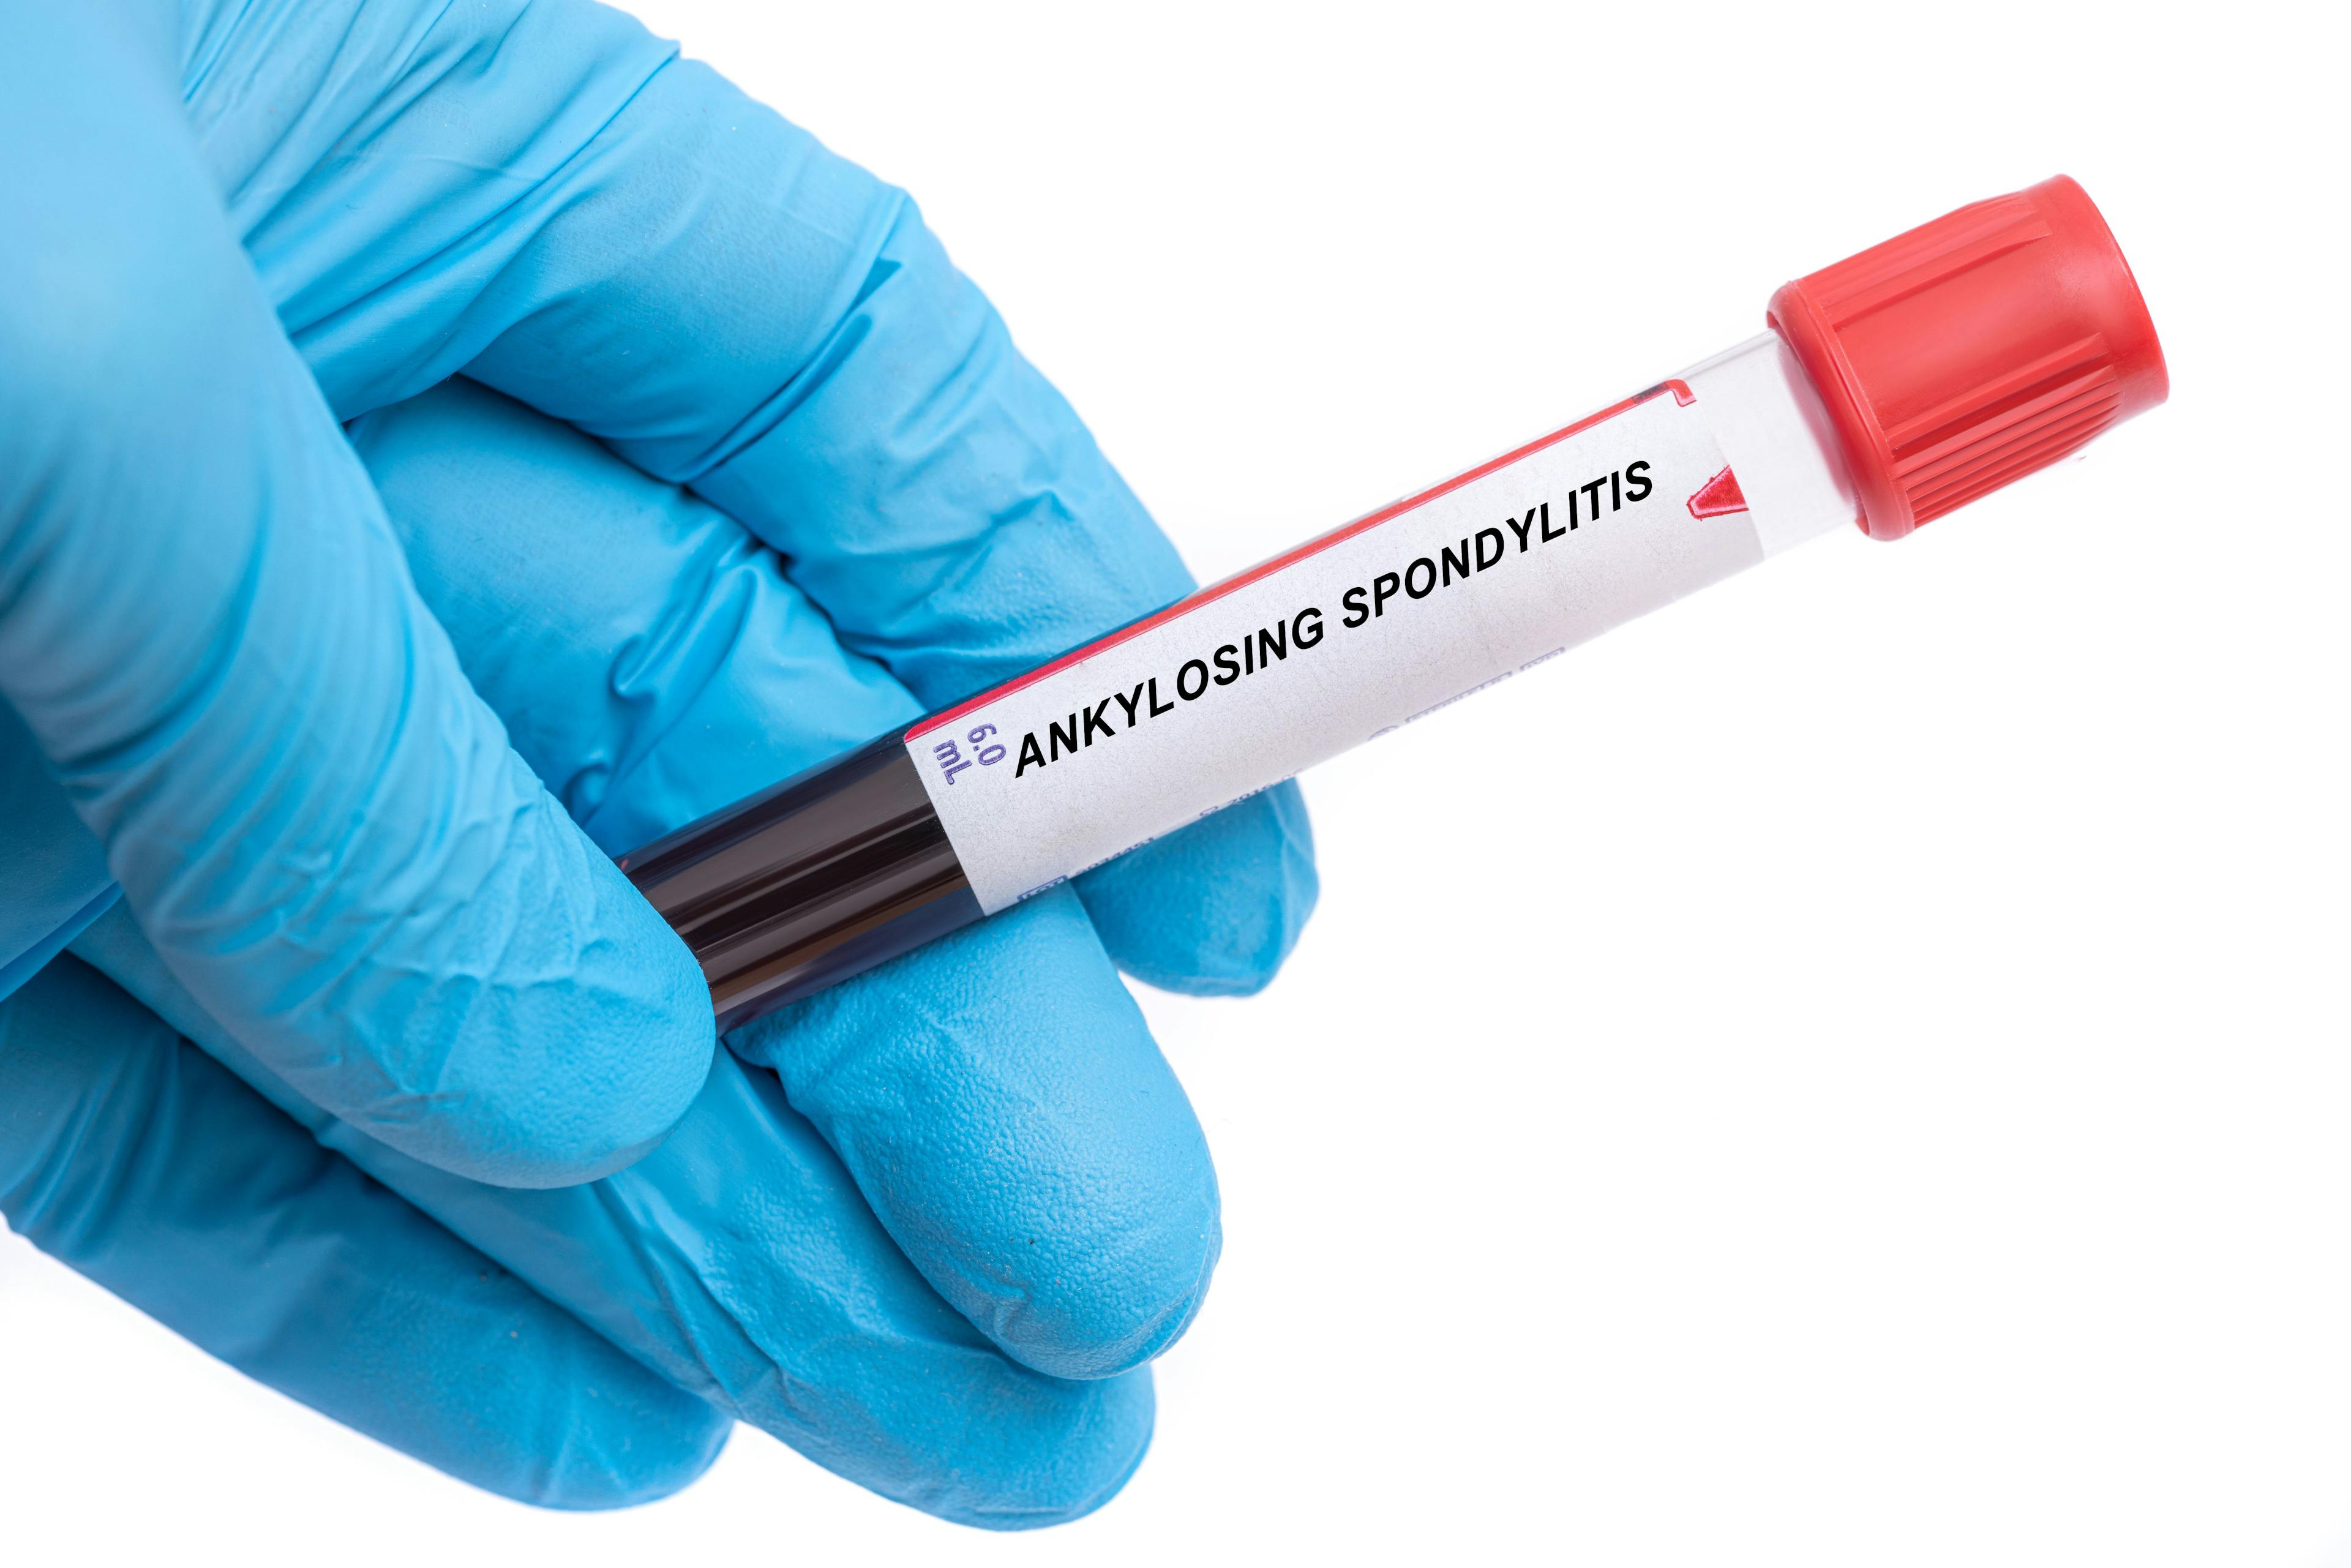 Ankylosing Spondylitis. Ankylosing Spondylitis disease blood test in doctor hand | Image Credit: luchschenF - stock.adobe.com